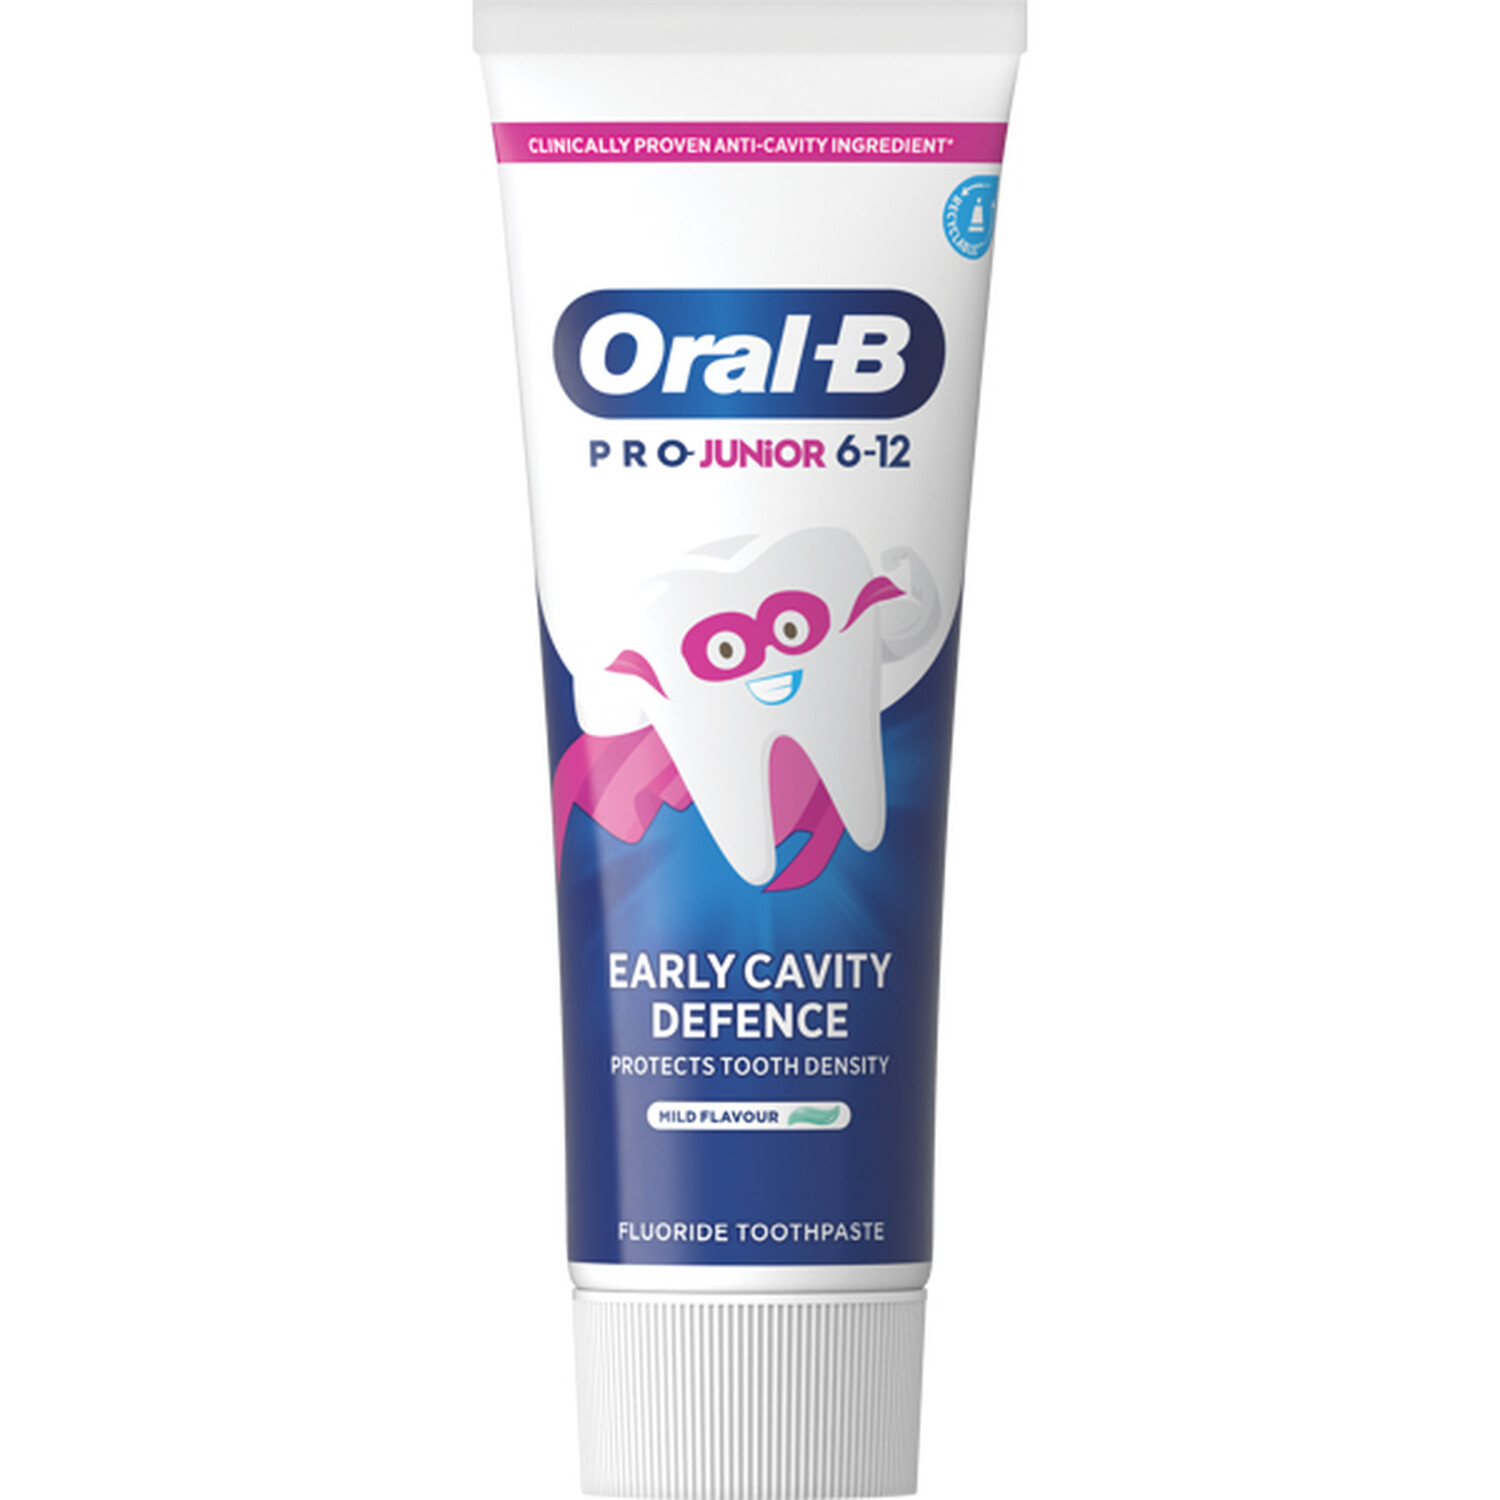 Oral-B Pro Junior 6-12 Kids Toothpaste - White Image